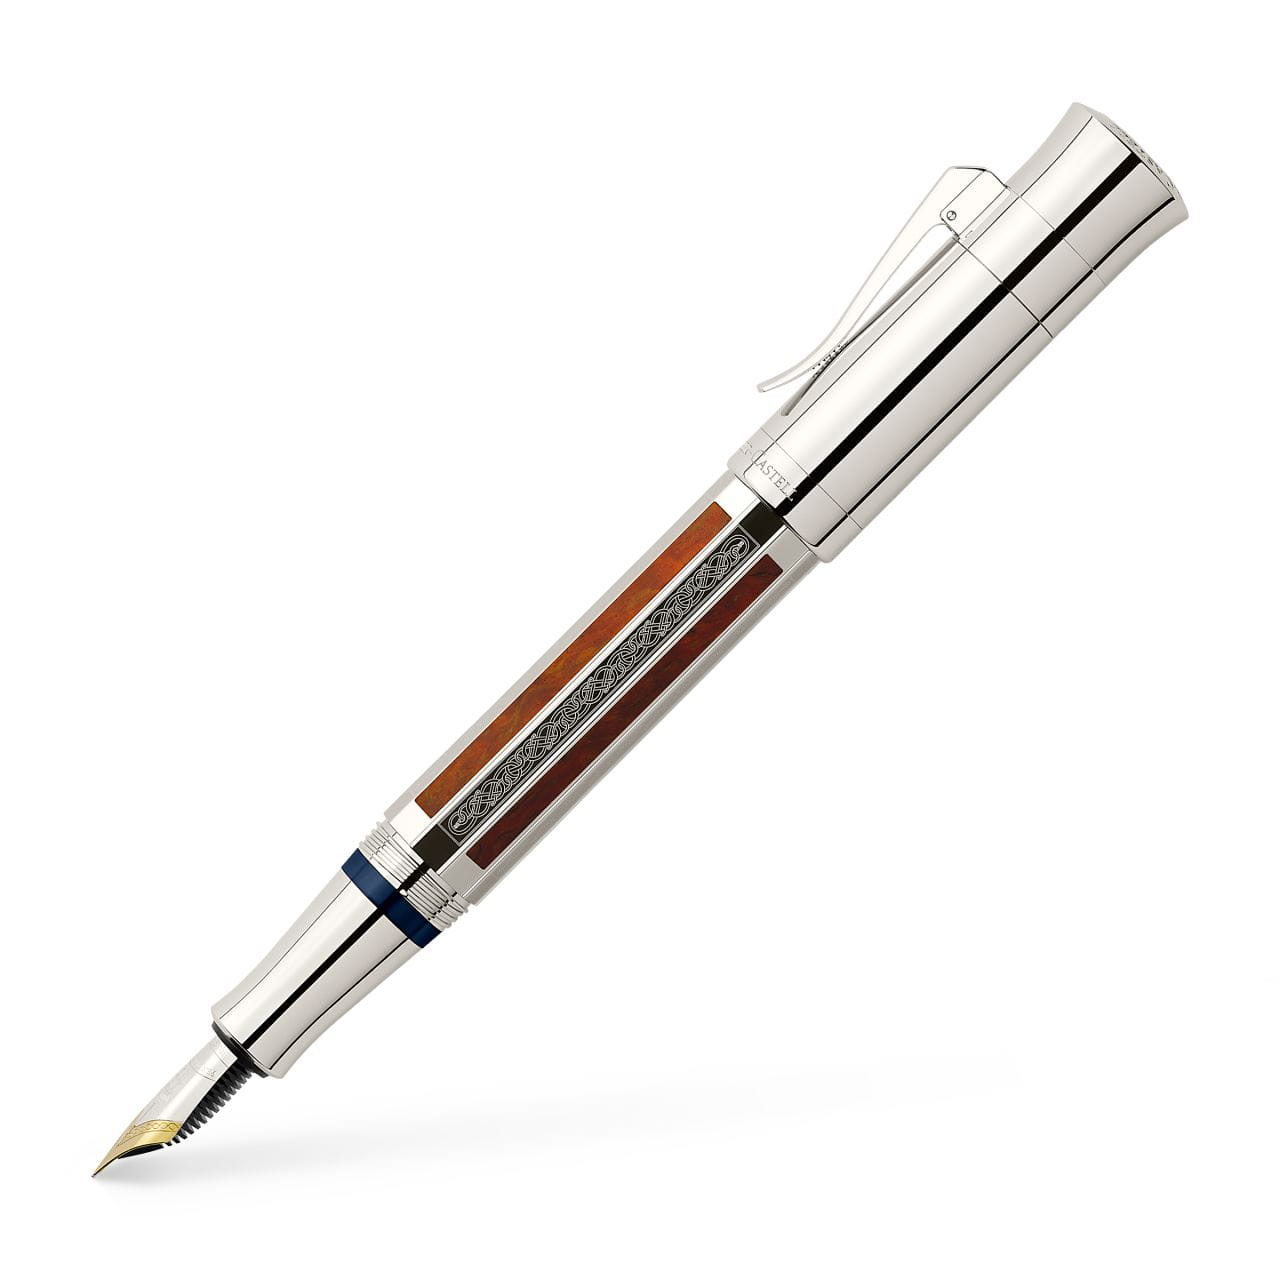 Graf-von-Faber-Castell - Penna stilografica Pen of the Year 2017, Broad